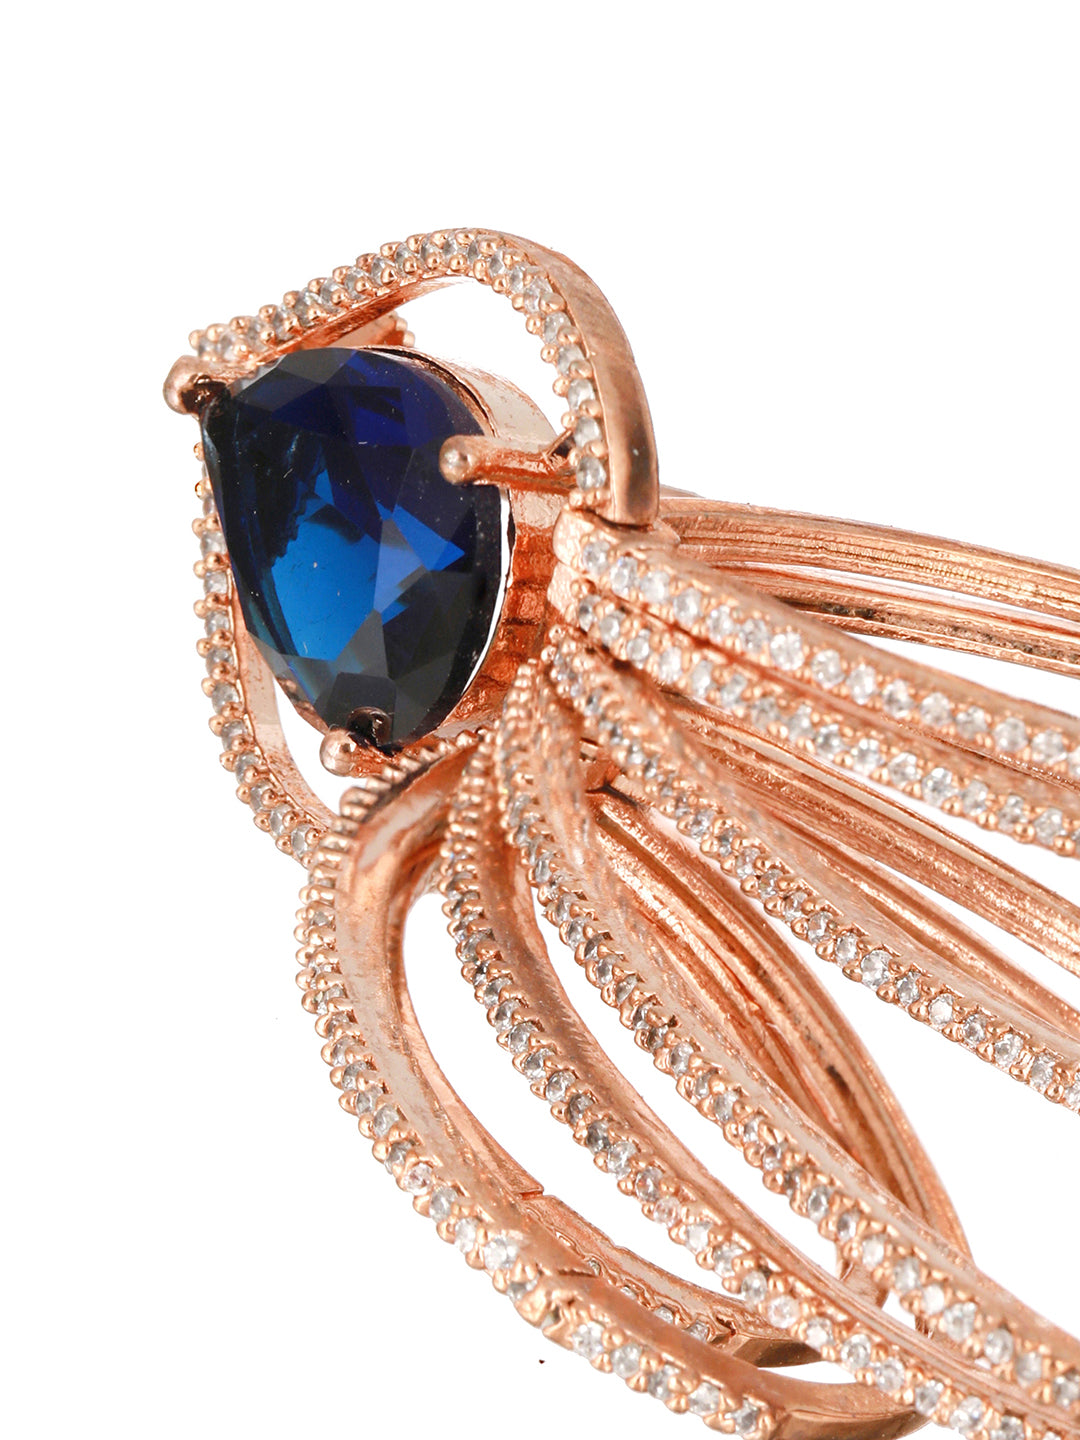 Blue Leaf Rings American Diamond Rose Gold-Plated Earrings